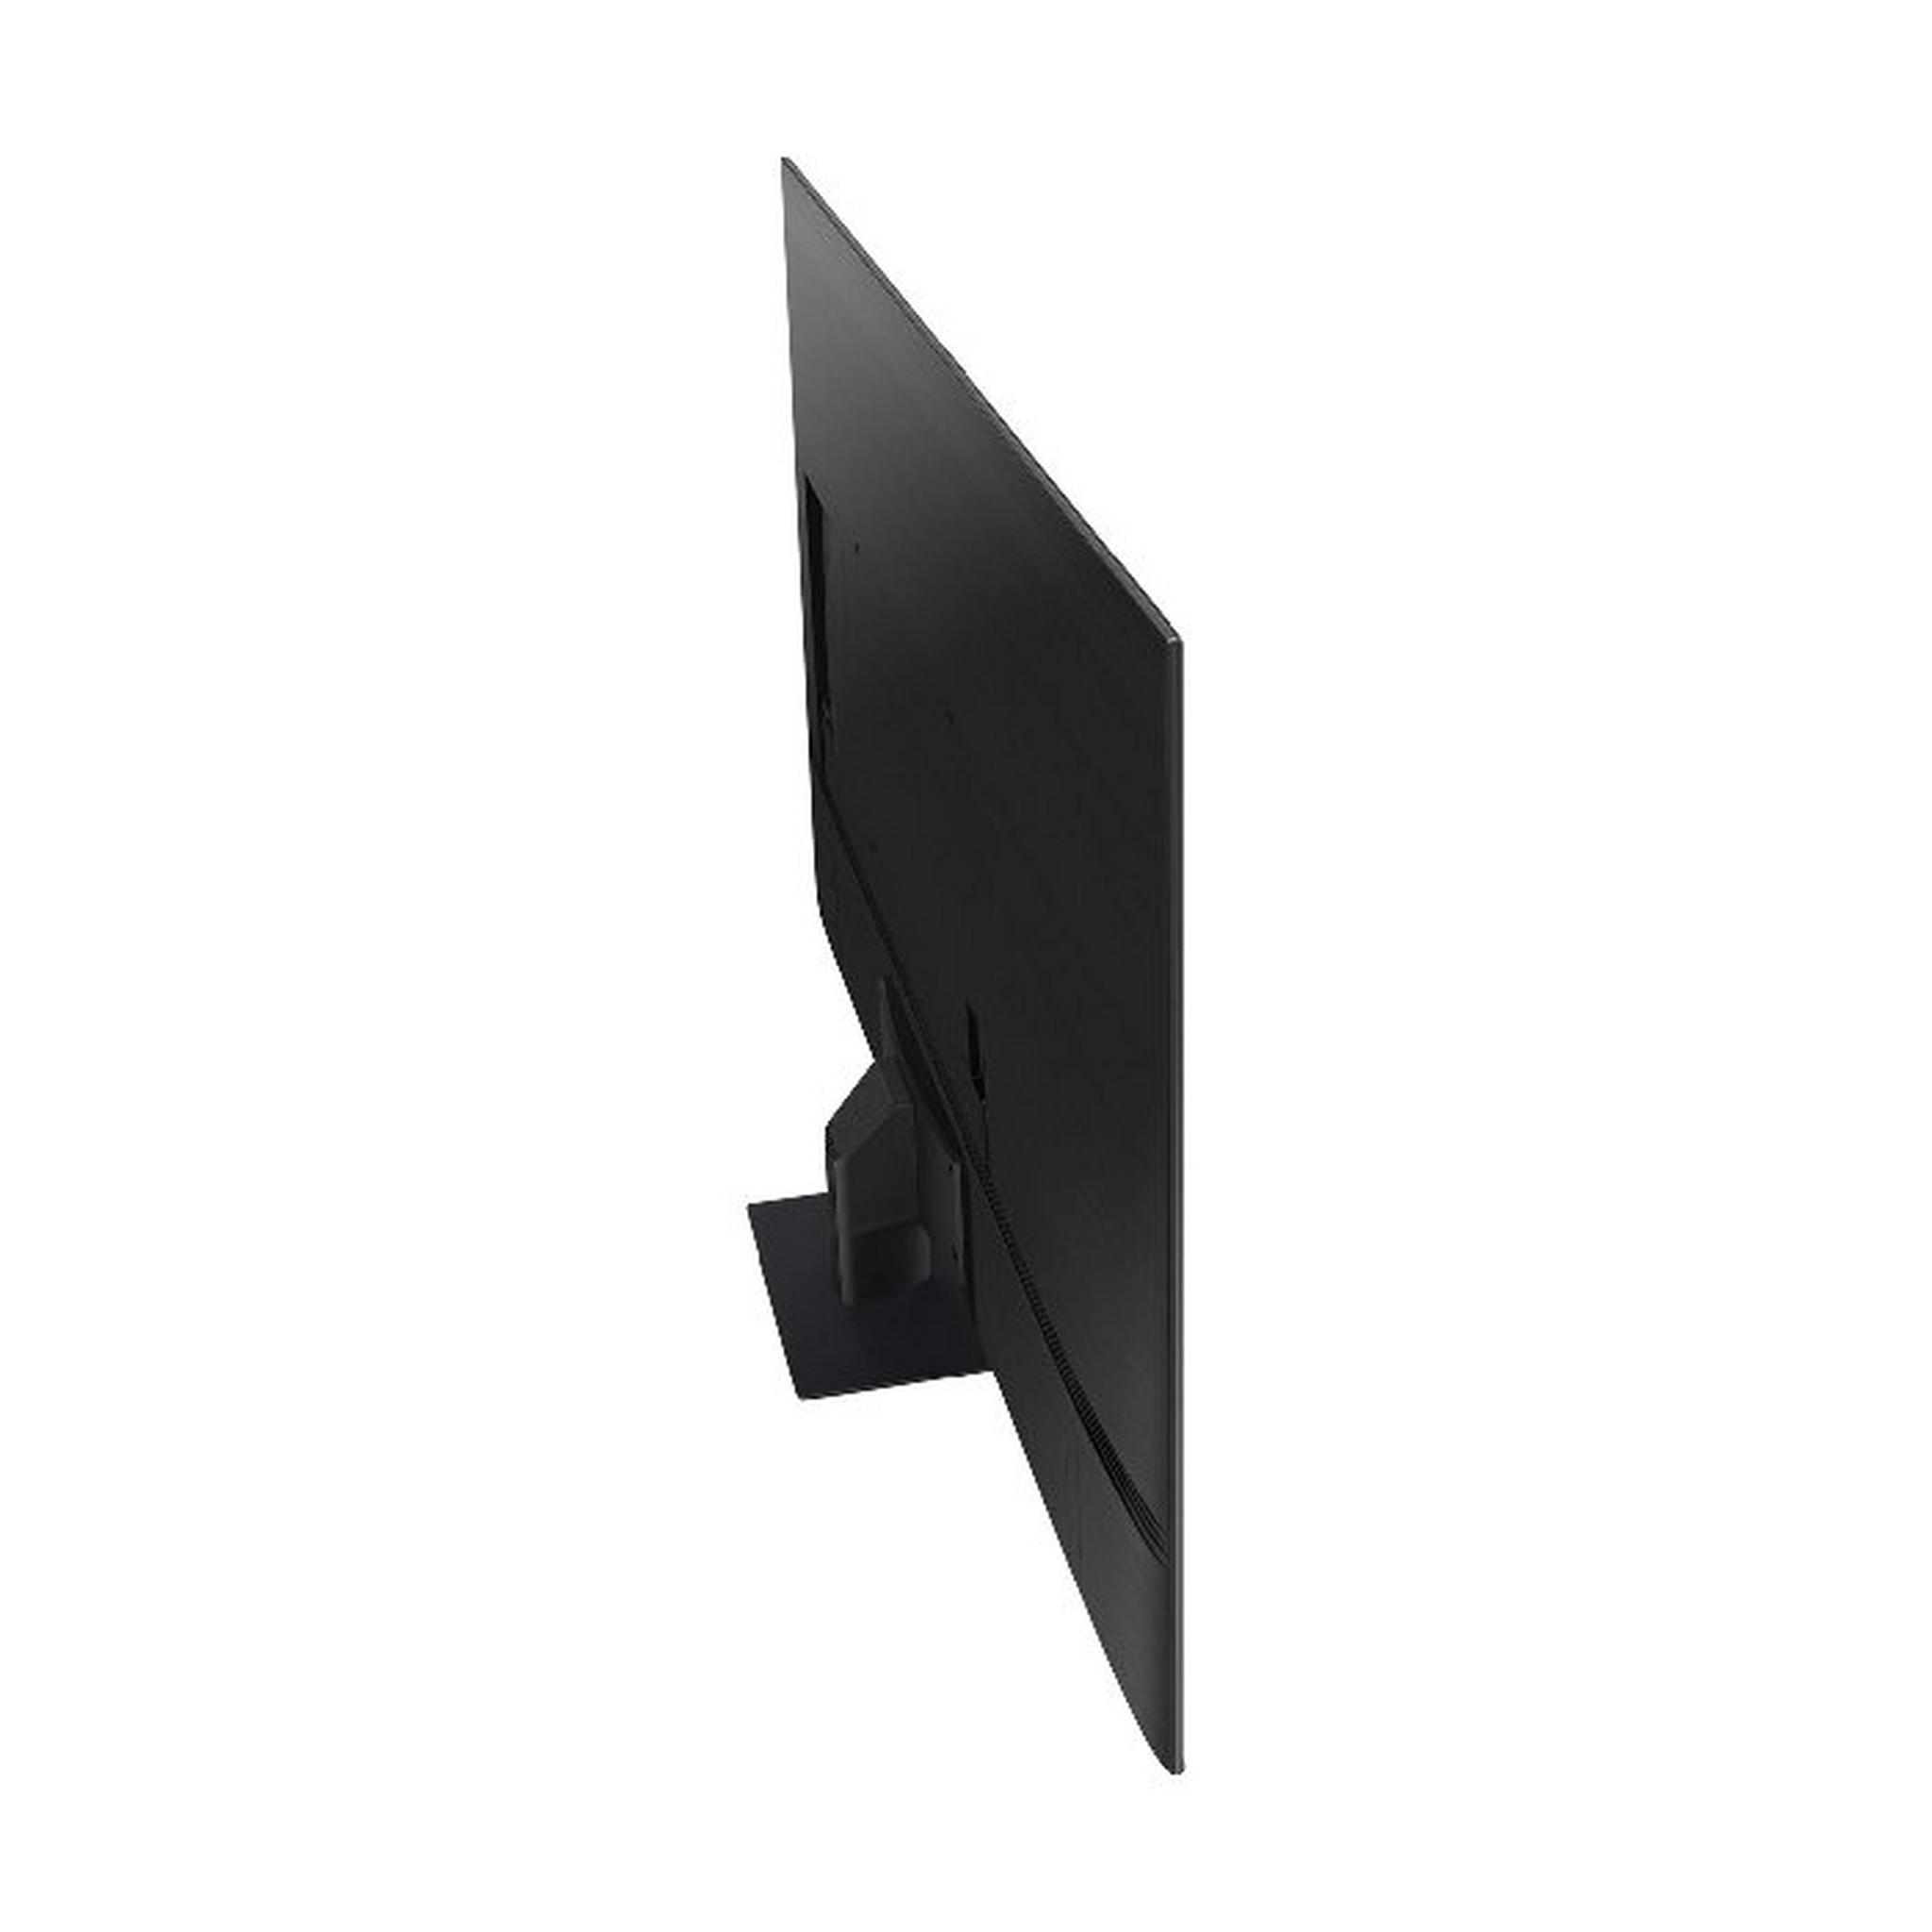 SAMSUNG S90C 55 -inch OLED 4K Smart TV QA55S90CAUXZN  Black